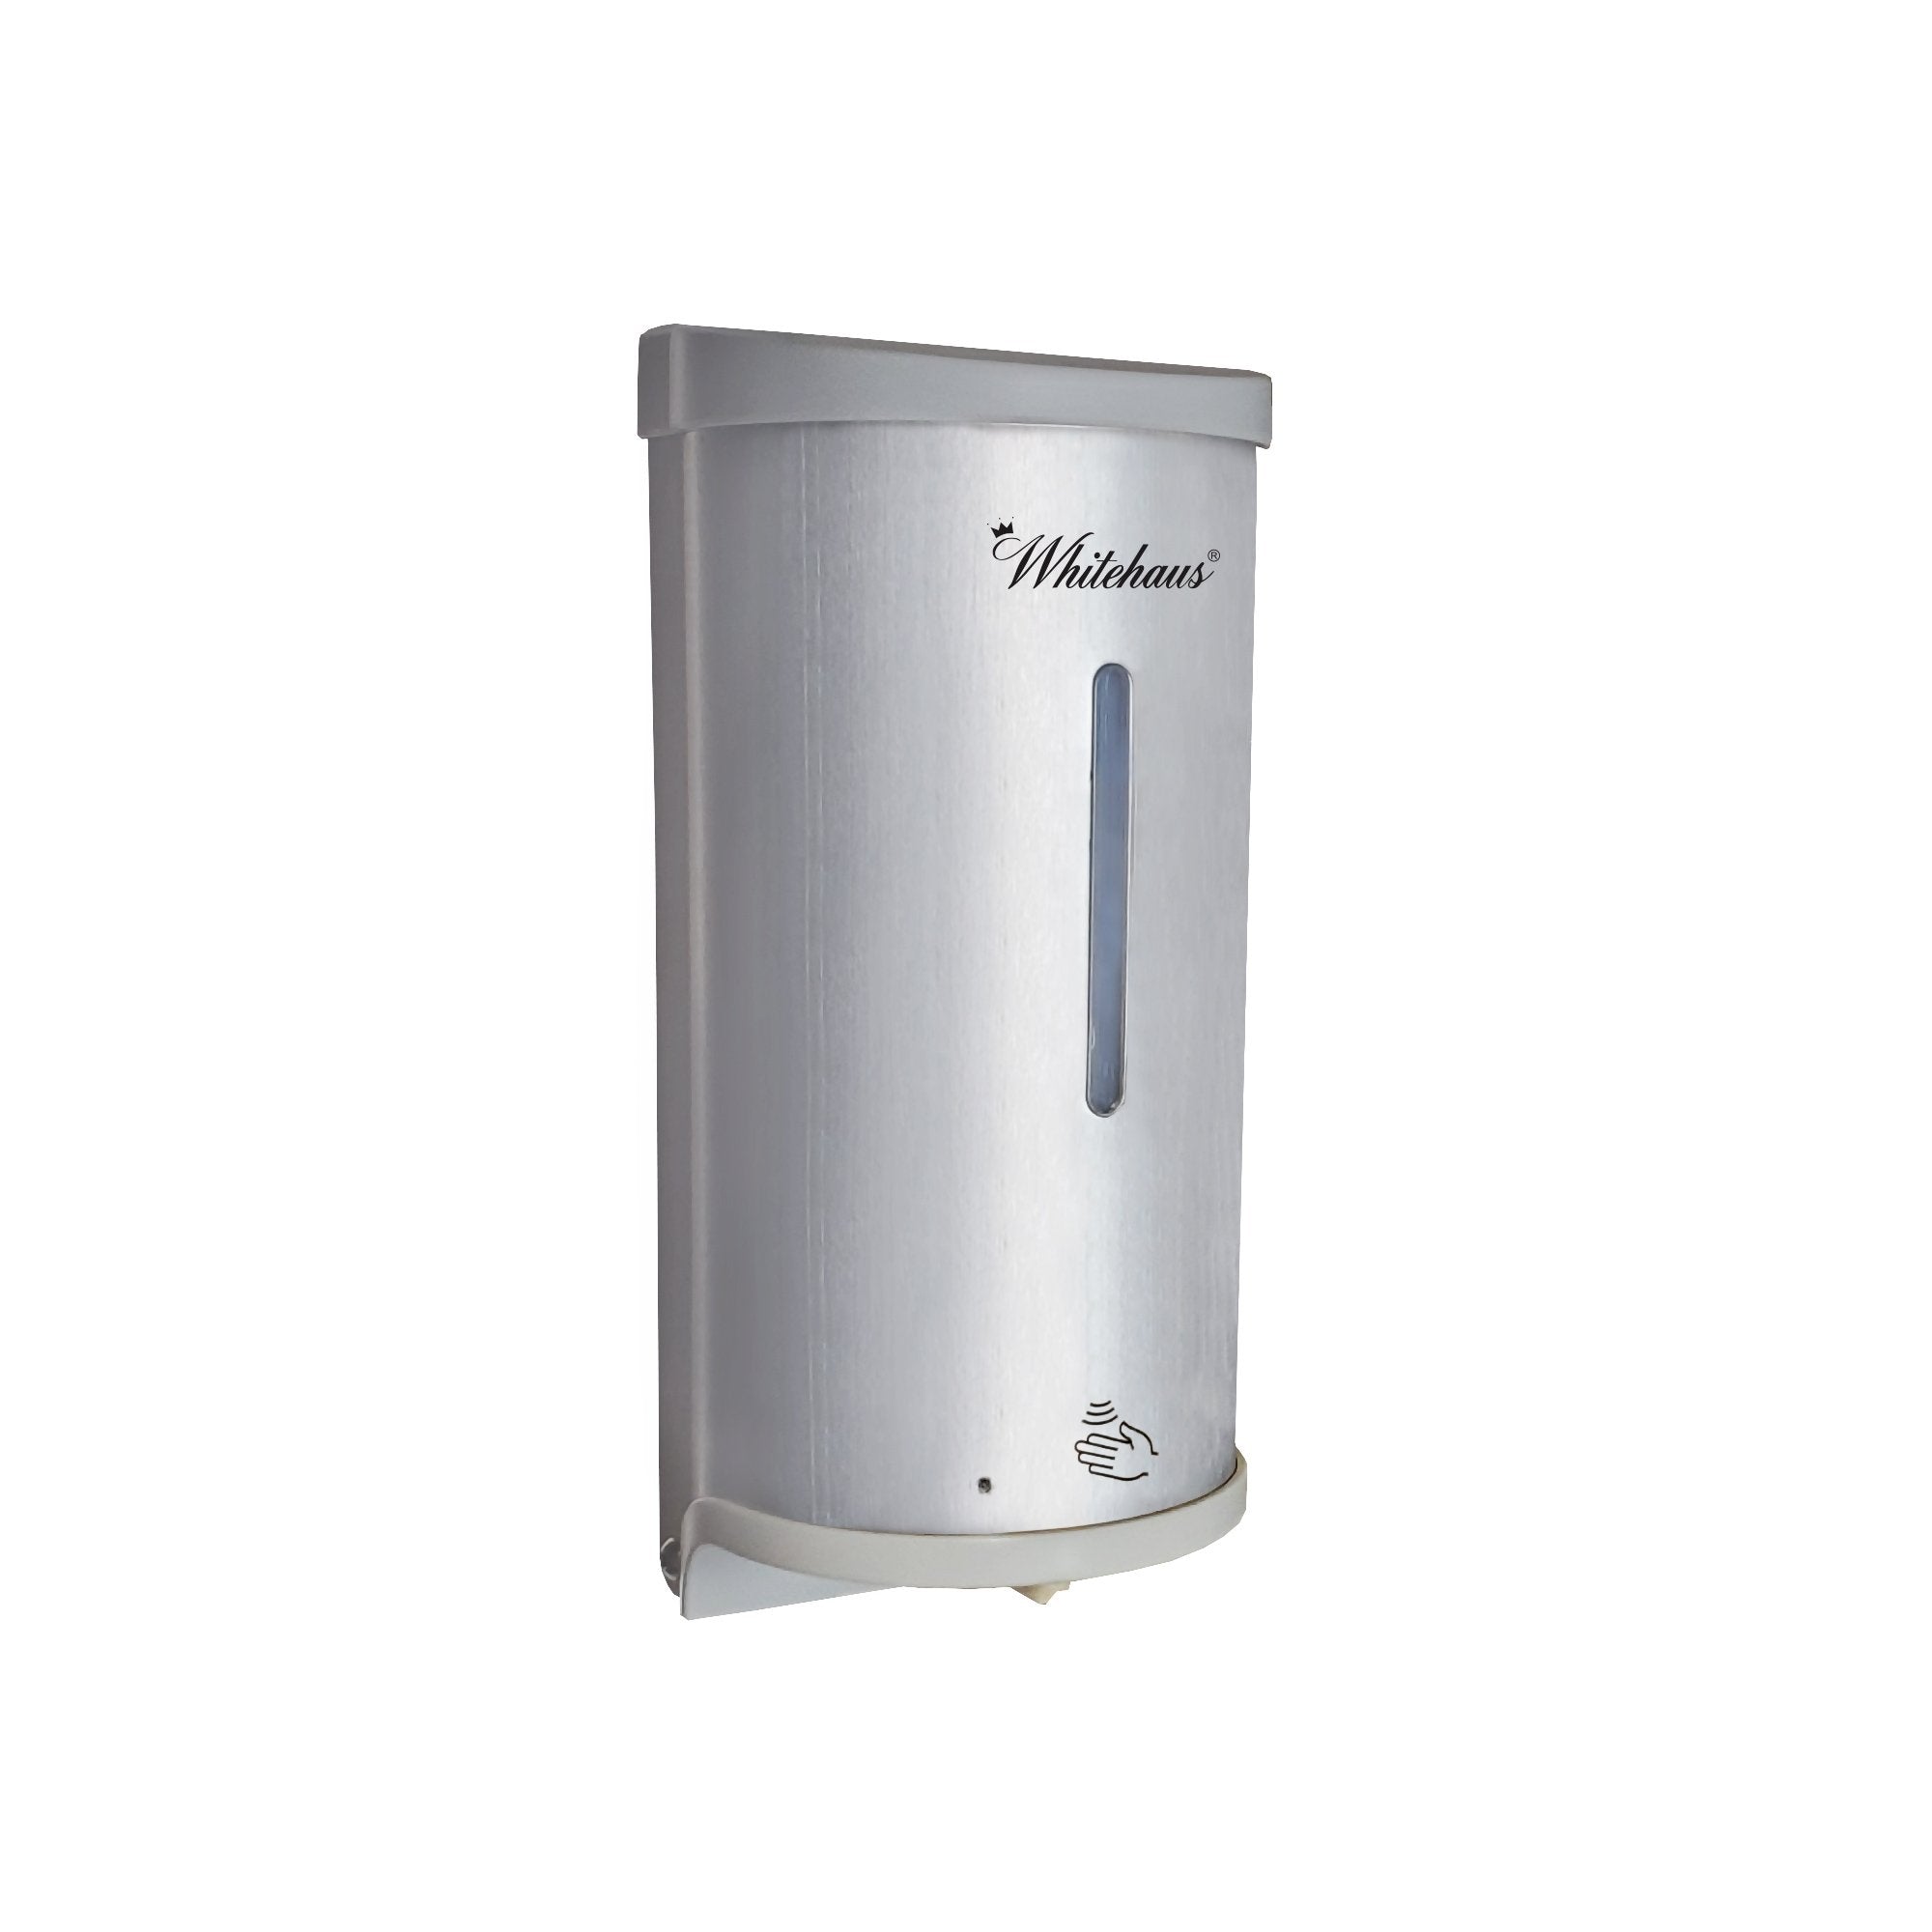 Soaphaus Stainless Steel Hands-free multi-function soap dispenser with sensor technology.